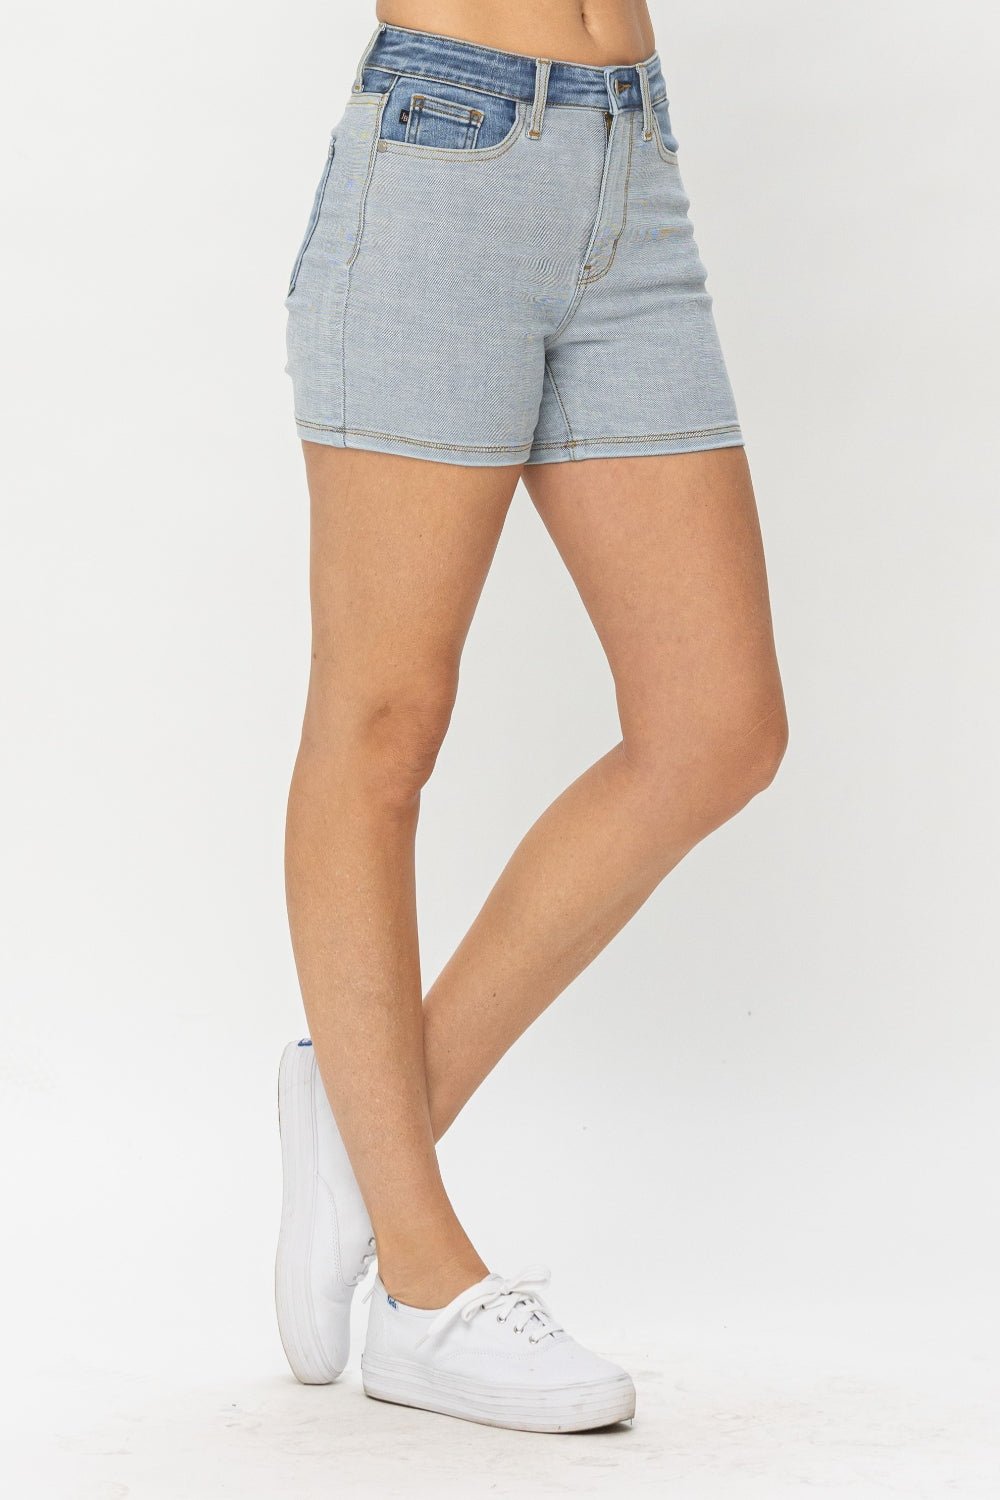 Judy Blue Full Size Color Block Denim Shorts - My Threaded Apparel | Online Women's Boutique - denim shorts